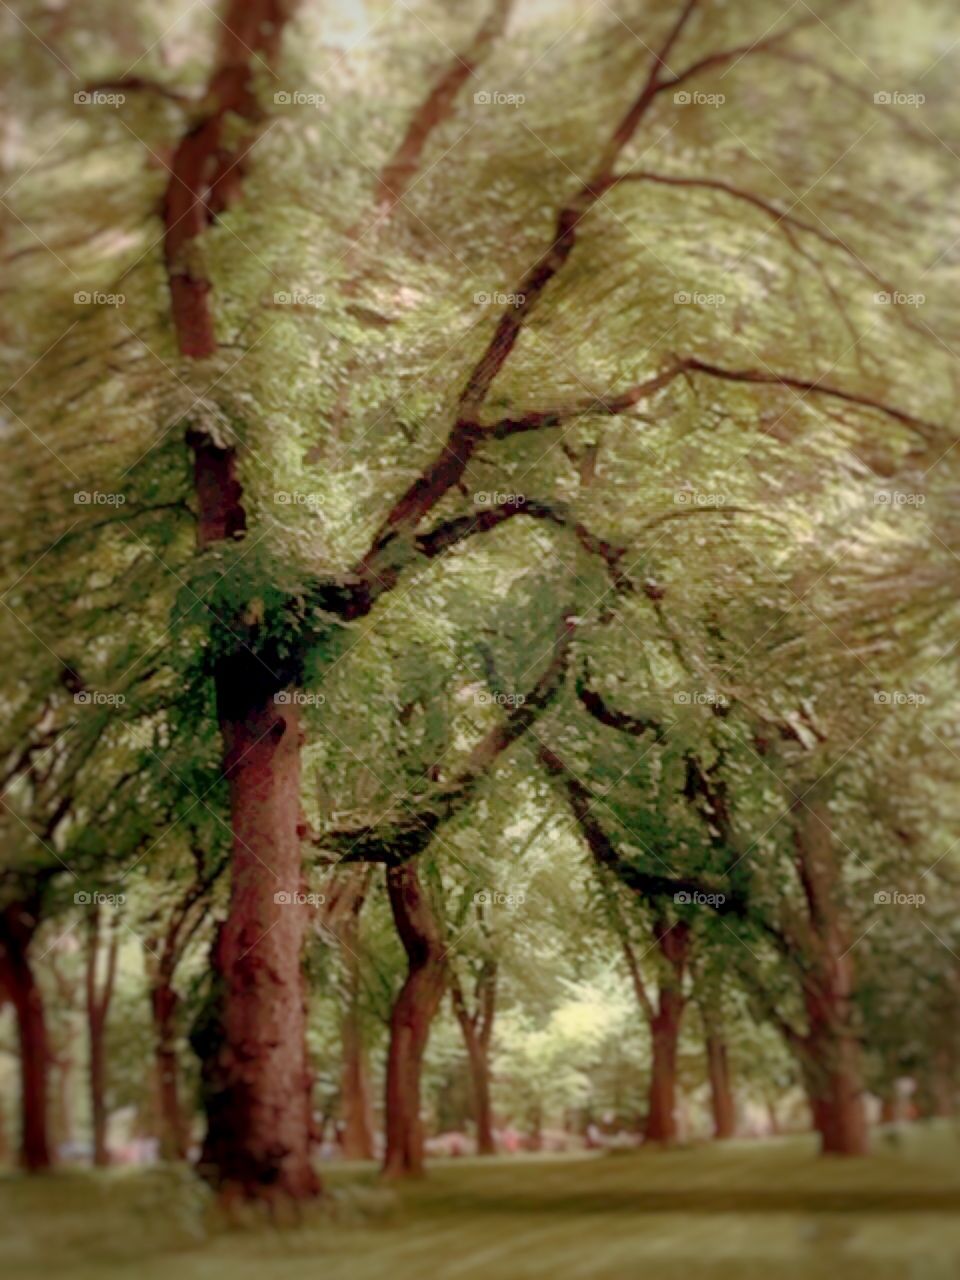 American Elm Trees- Central Park, New York City. 